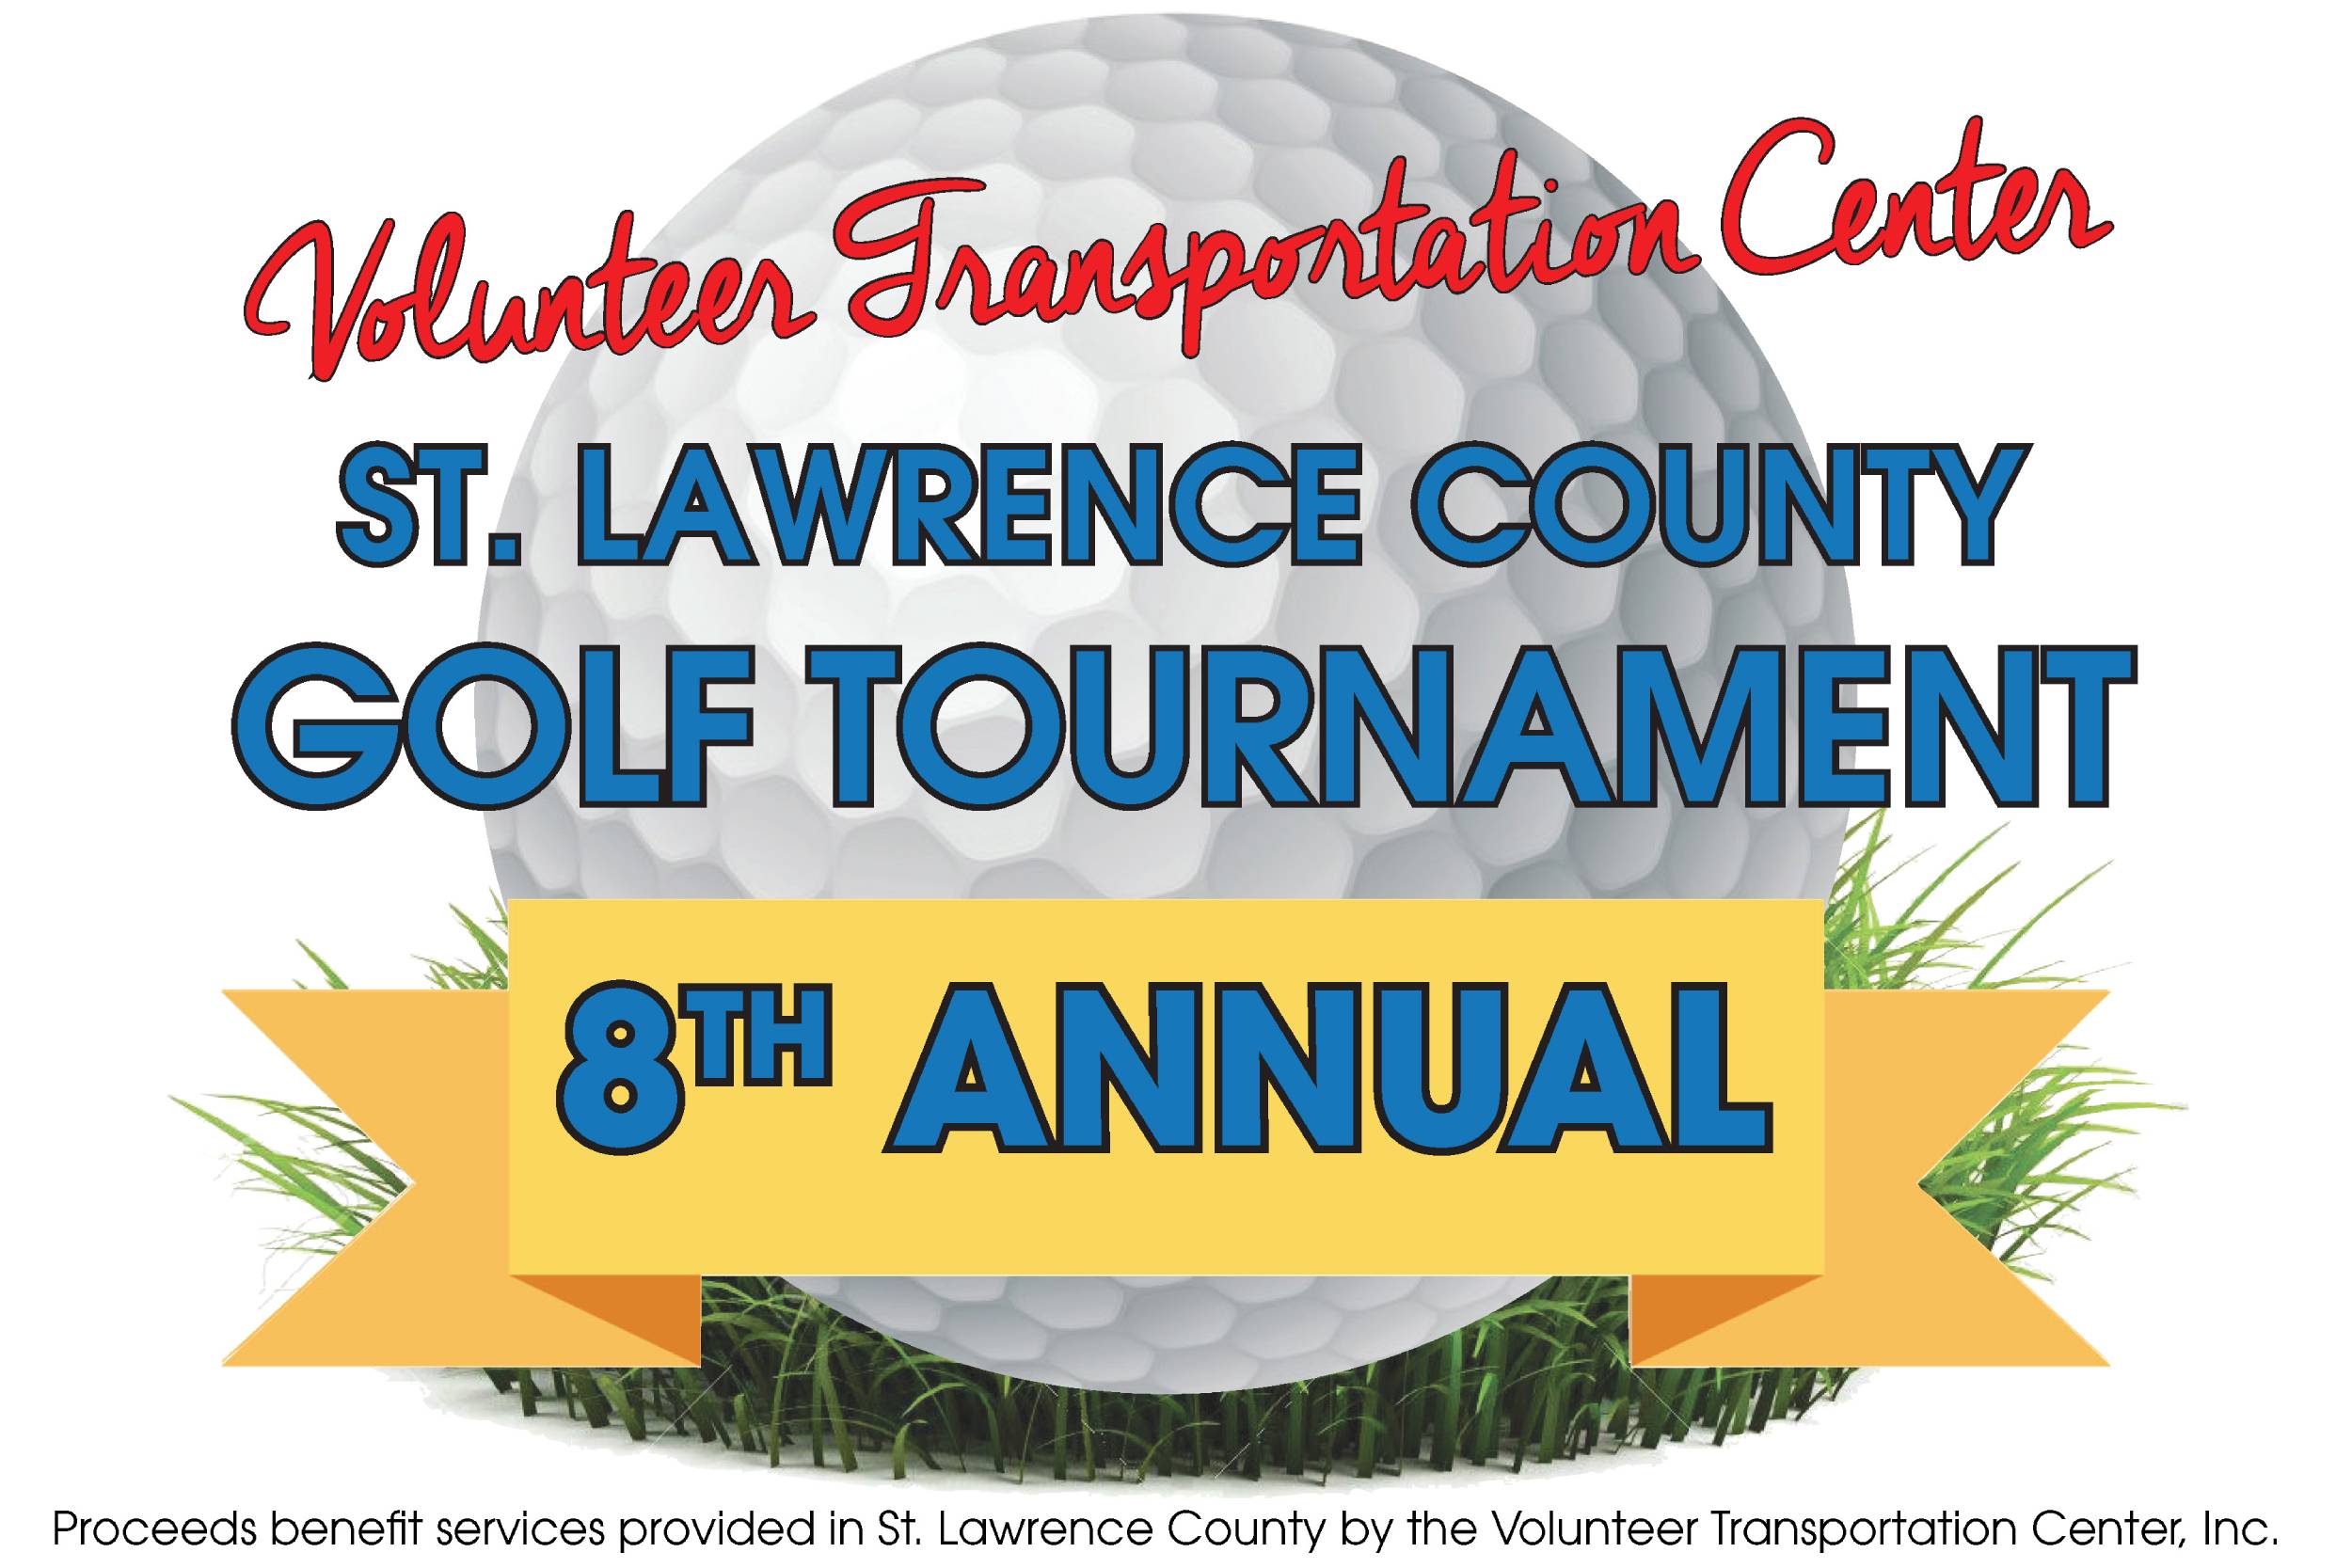 Volunteer Transportation Center St. Lawrence County Golf Tournament